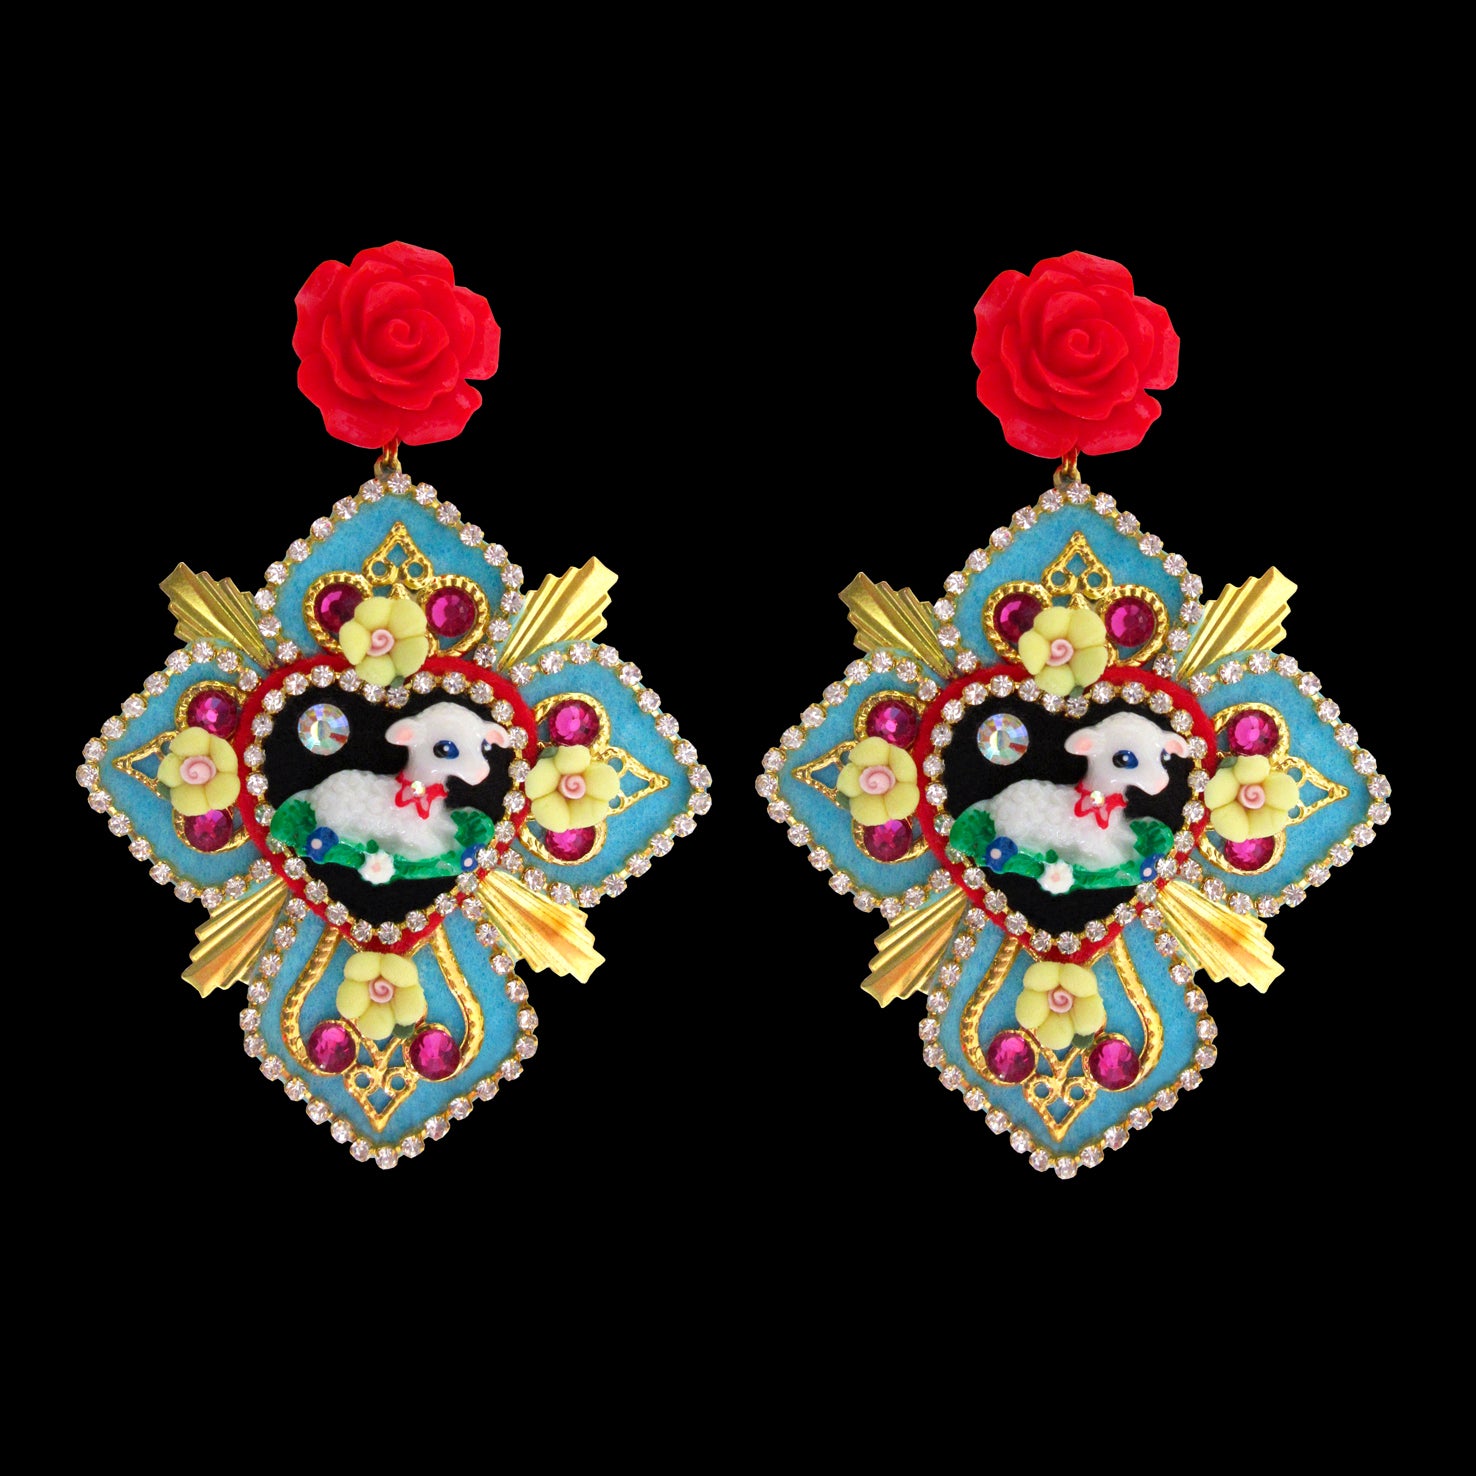 Mouchkine Jewelry haute couture handmade cross and sheep earrings. 